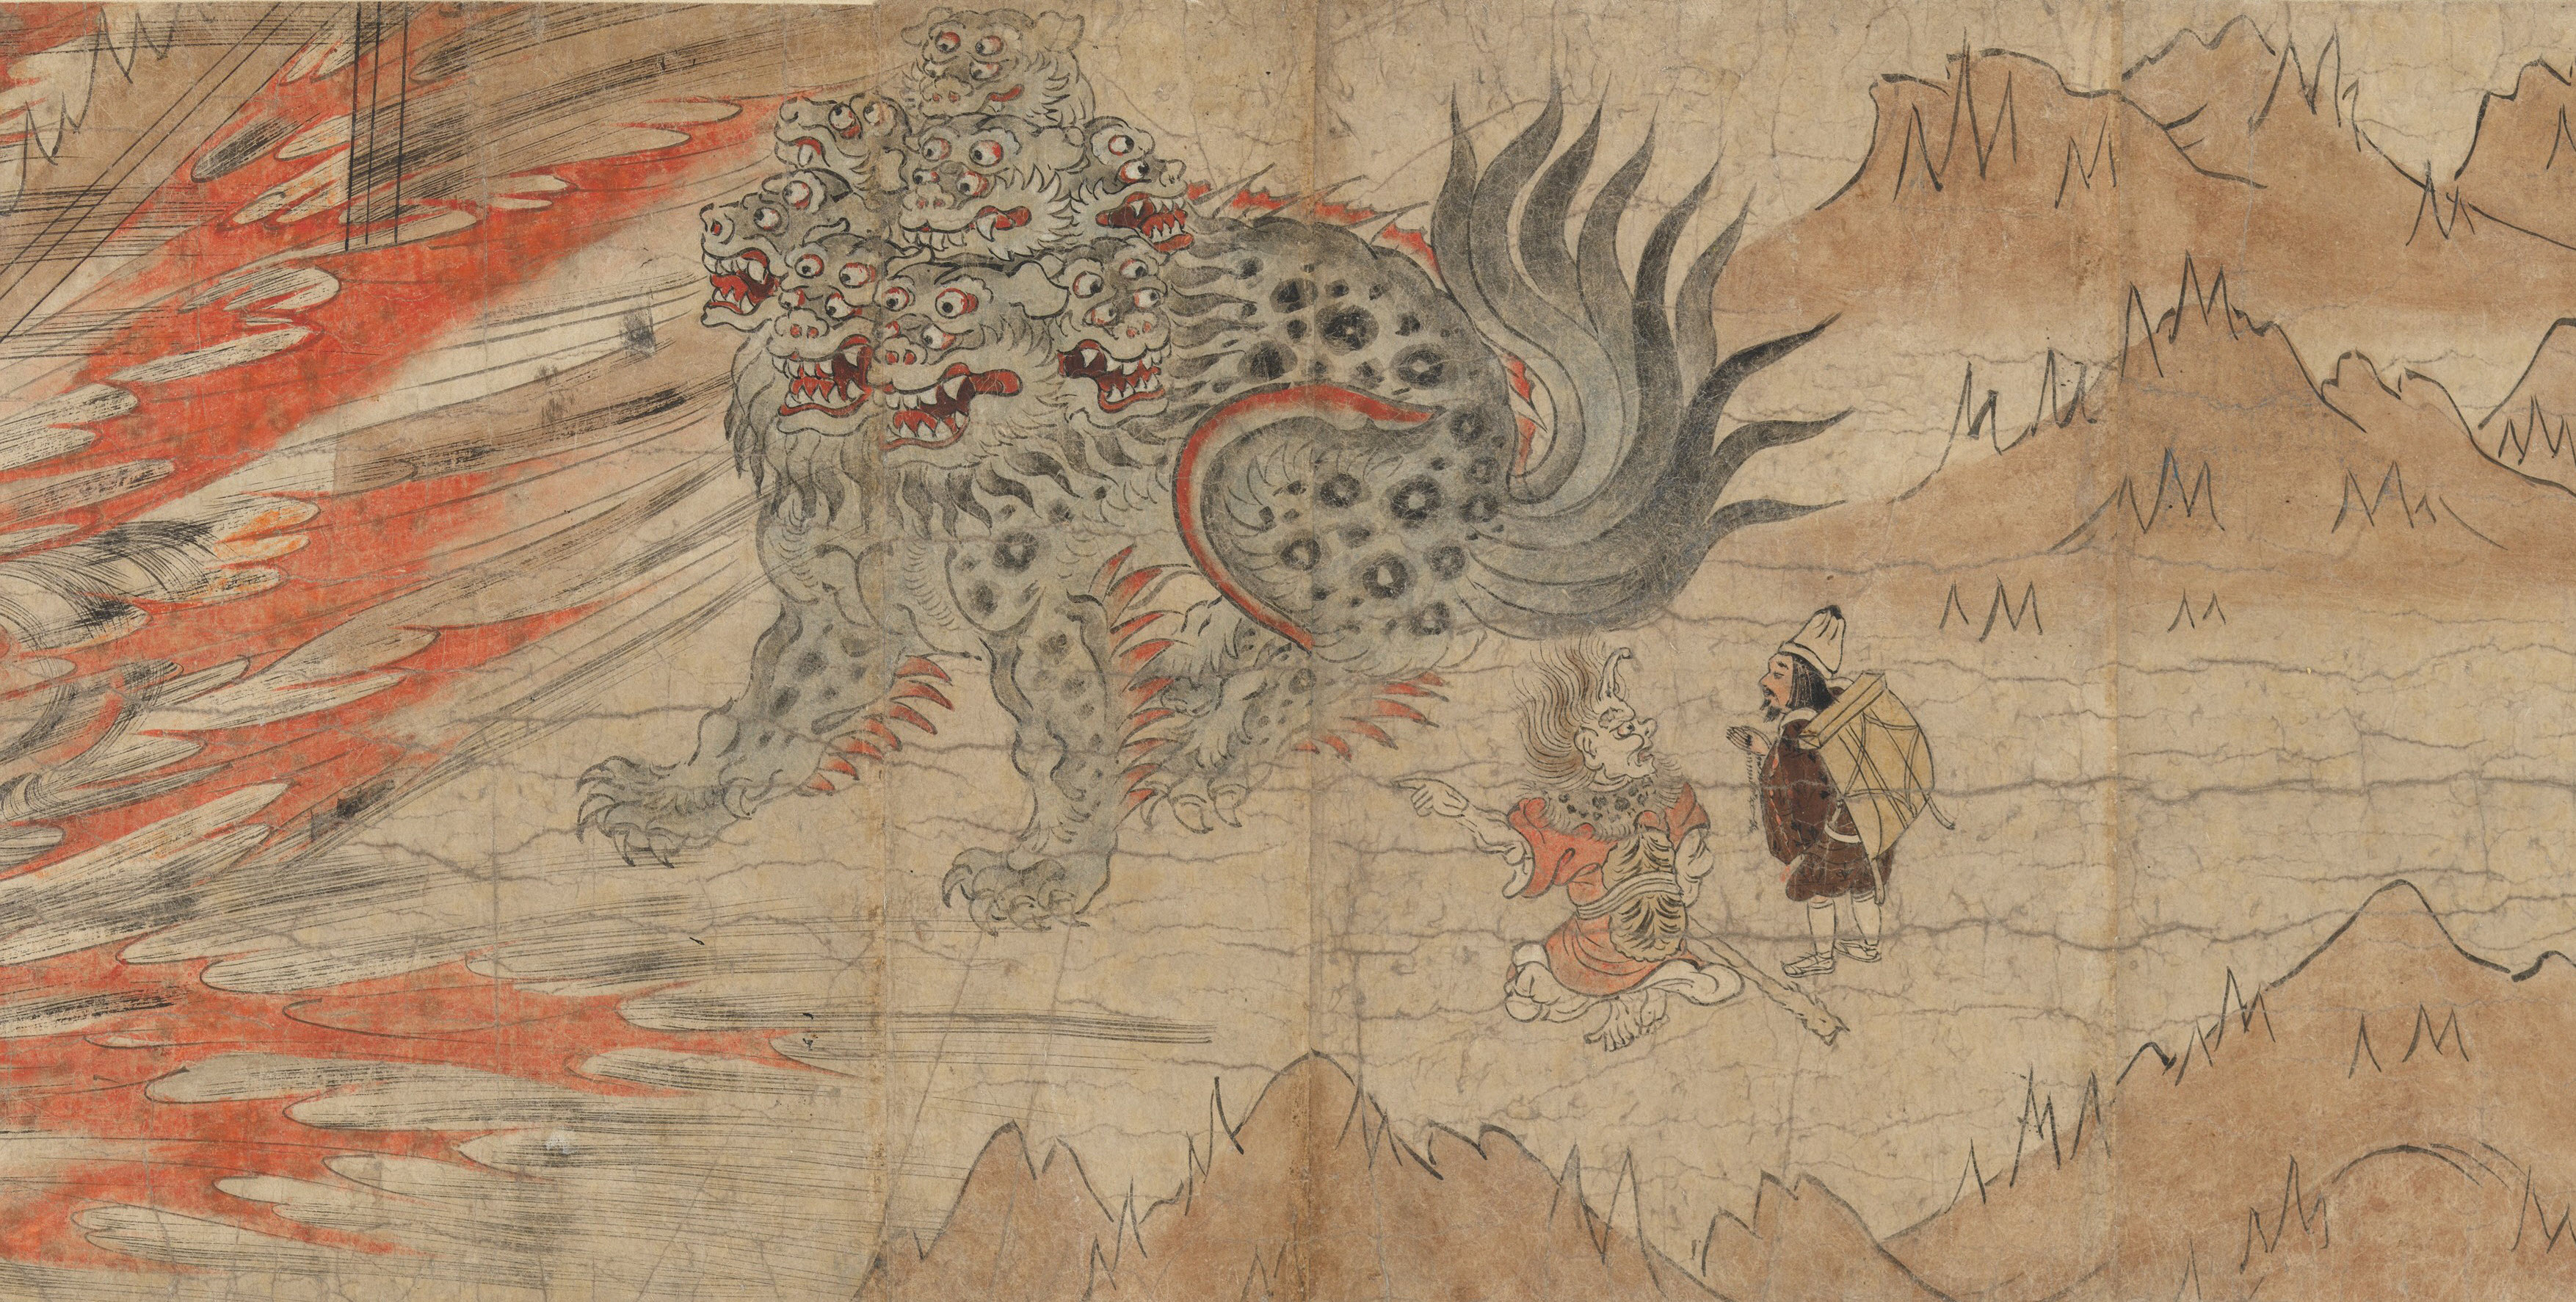 Lendas ilustradas do Santuário Kitano Tenjin by Artista Desconhecido - Século XIII tardio - 28.8 × 571,4 cm 